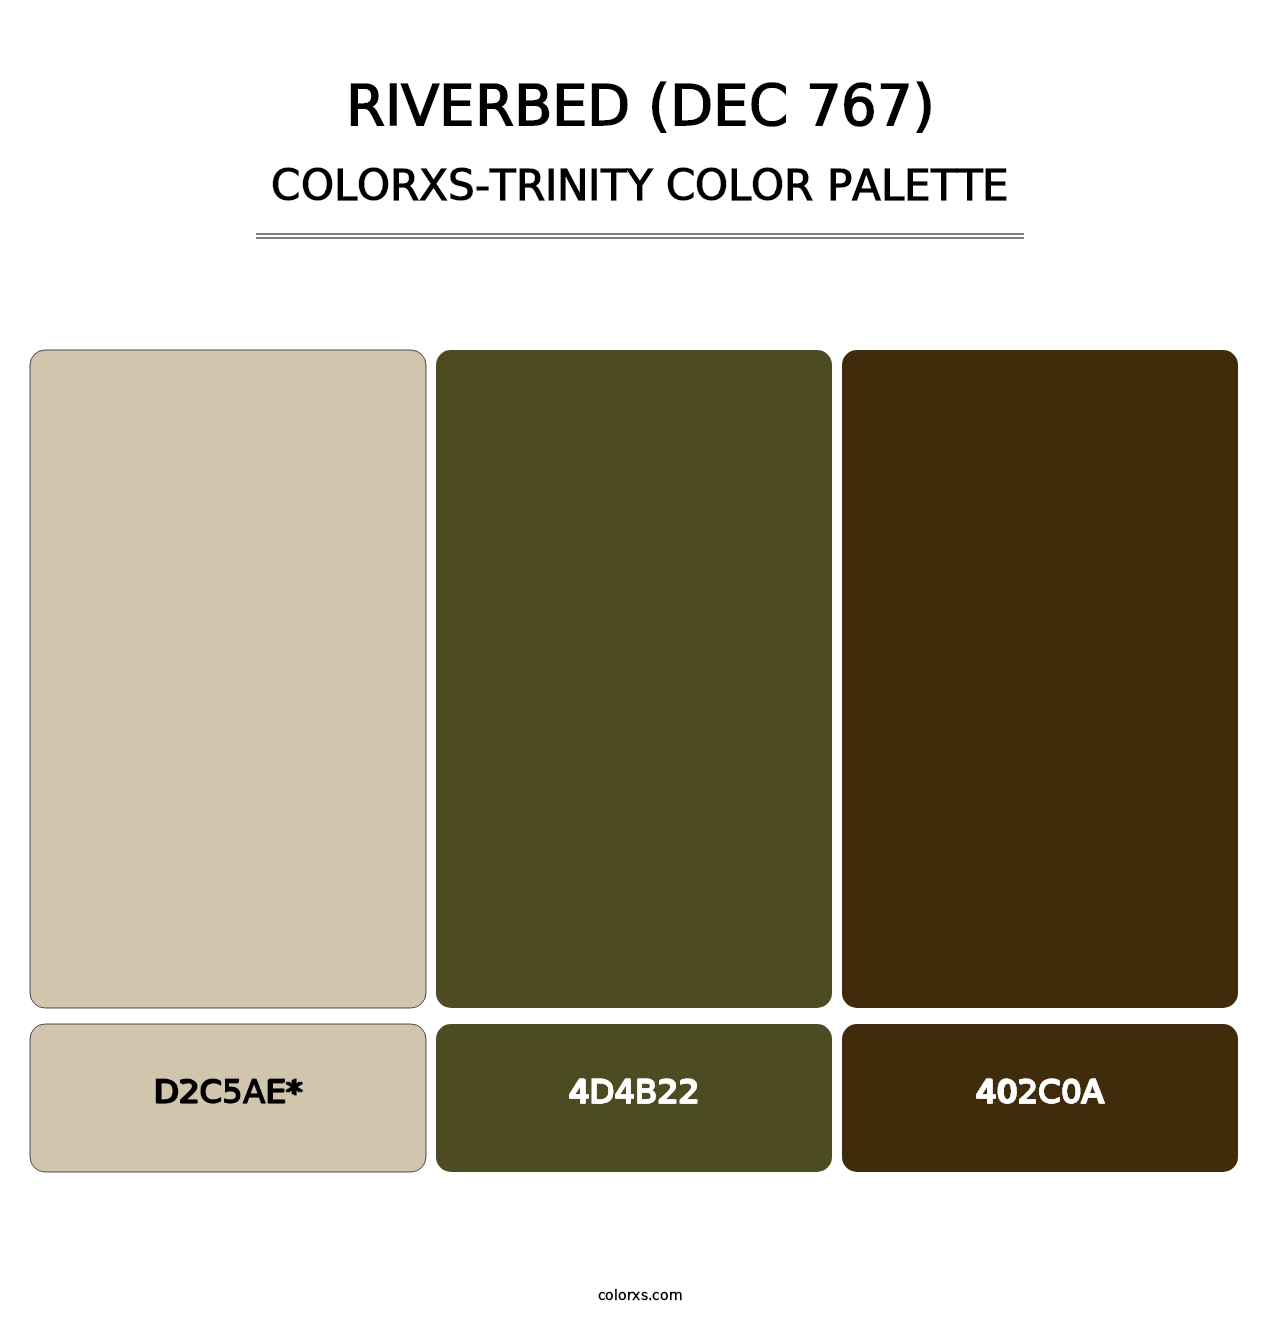 Riverbed (DEC 767) - Colorxs Trinity Palette